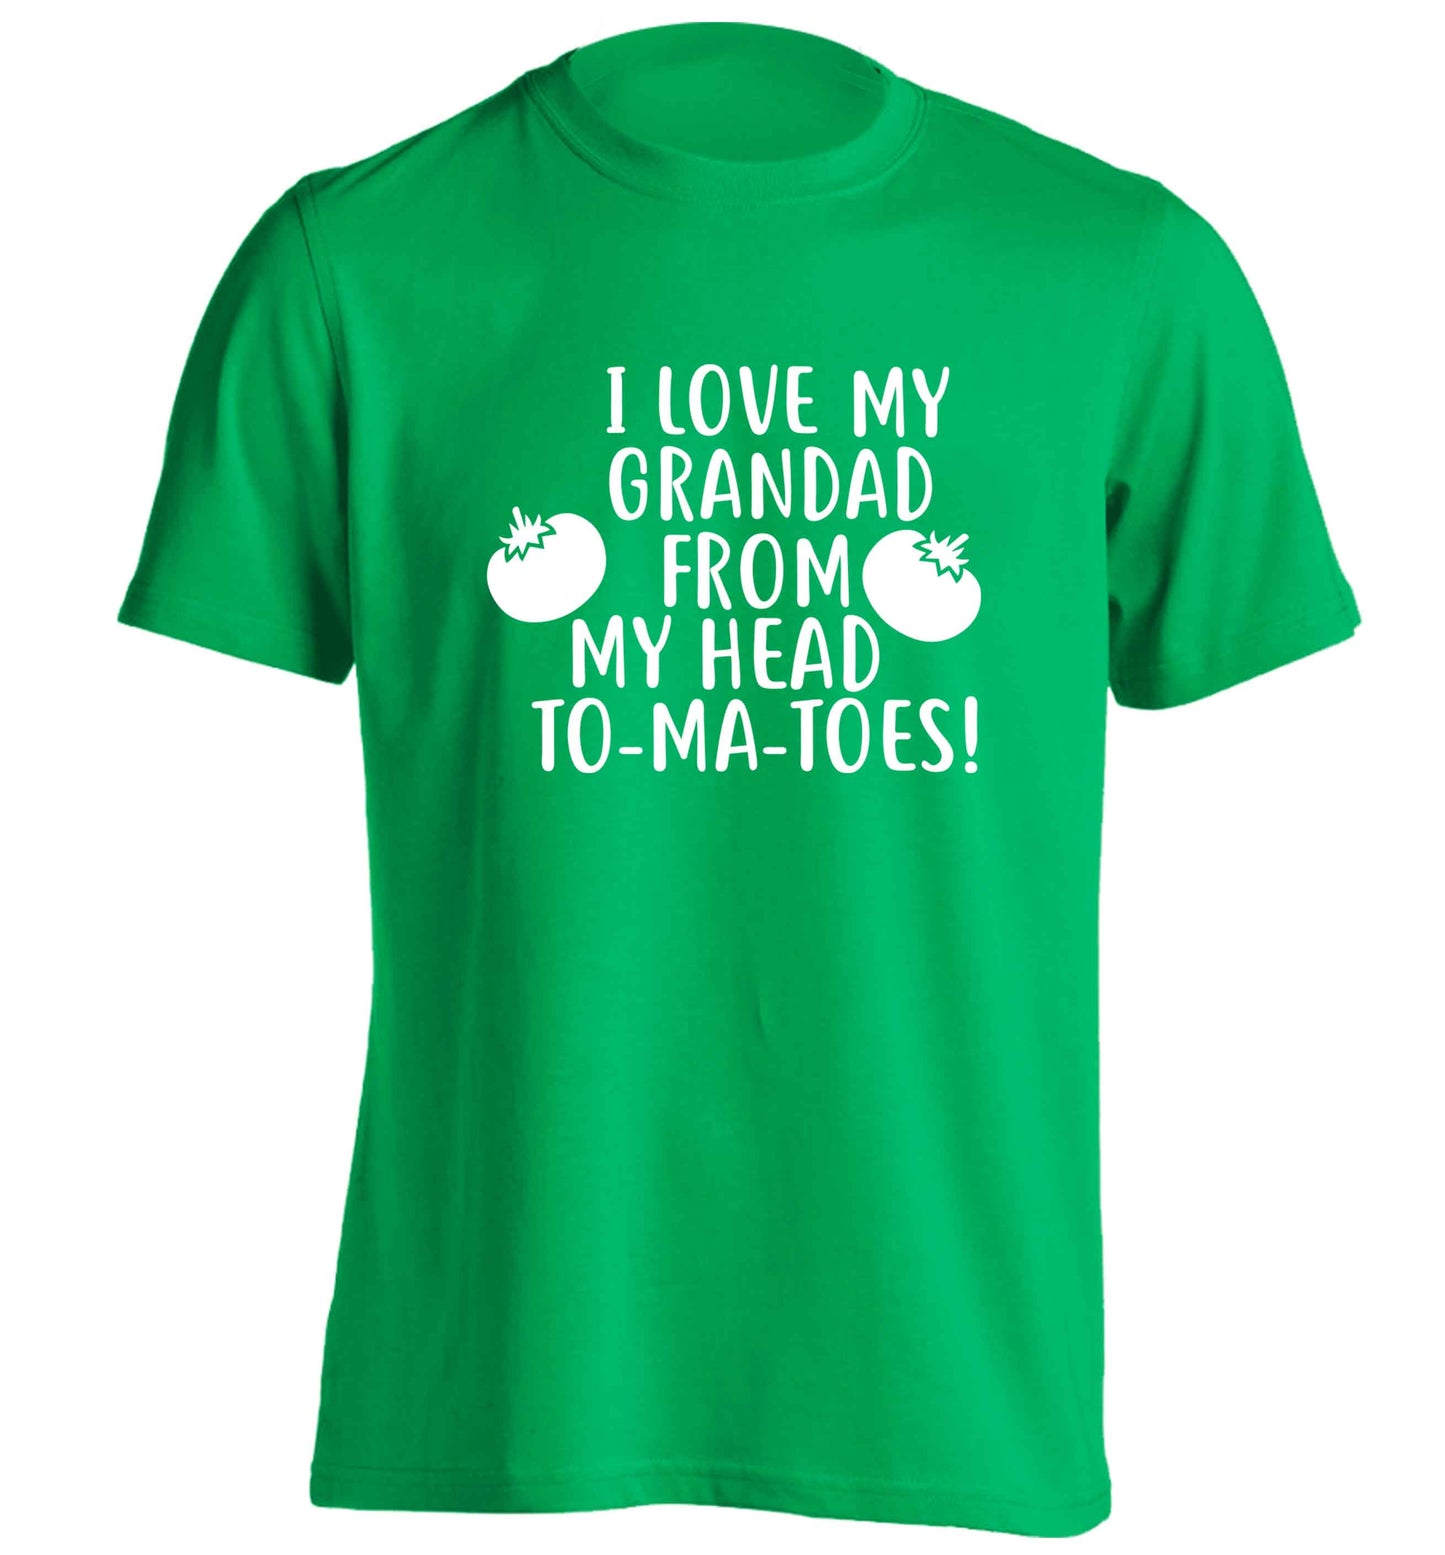 I love my grandad from my head To-Ma-Toes adults unisex green Tshirt 2XL